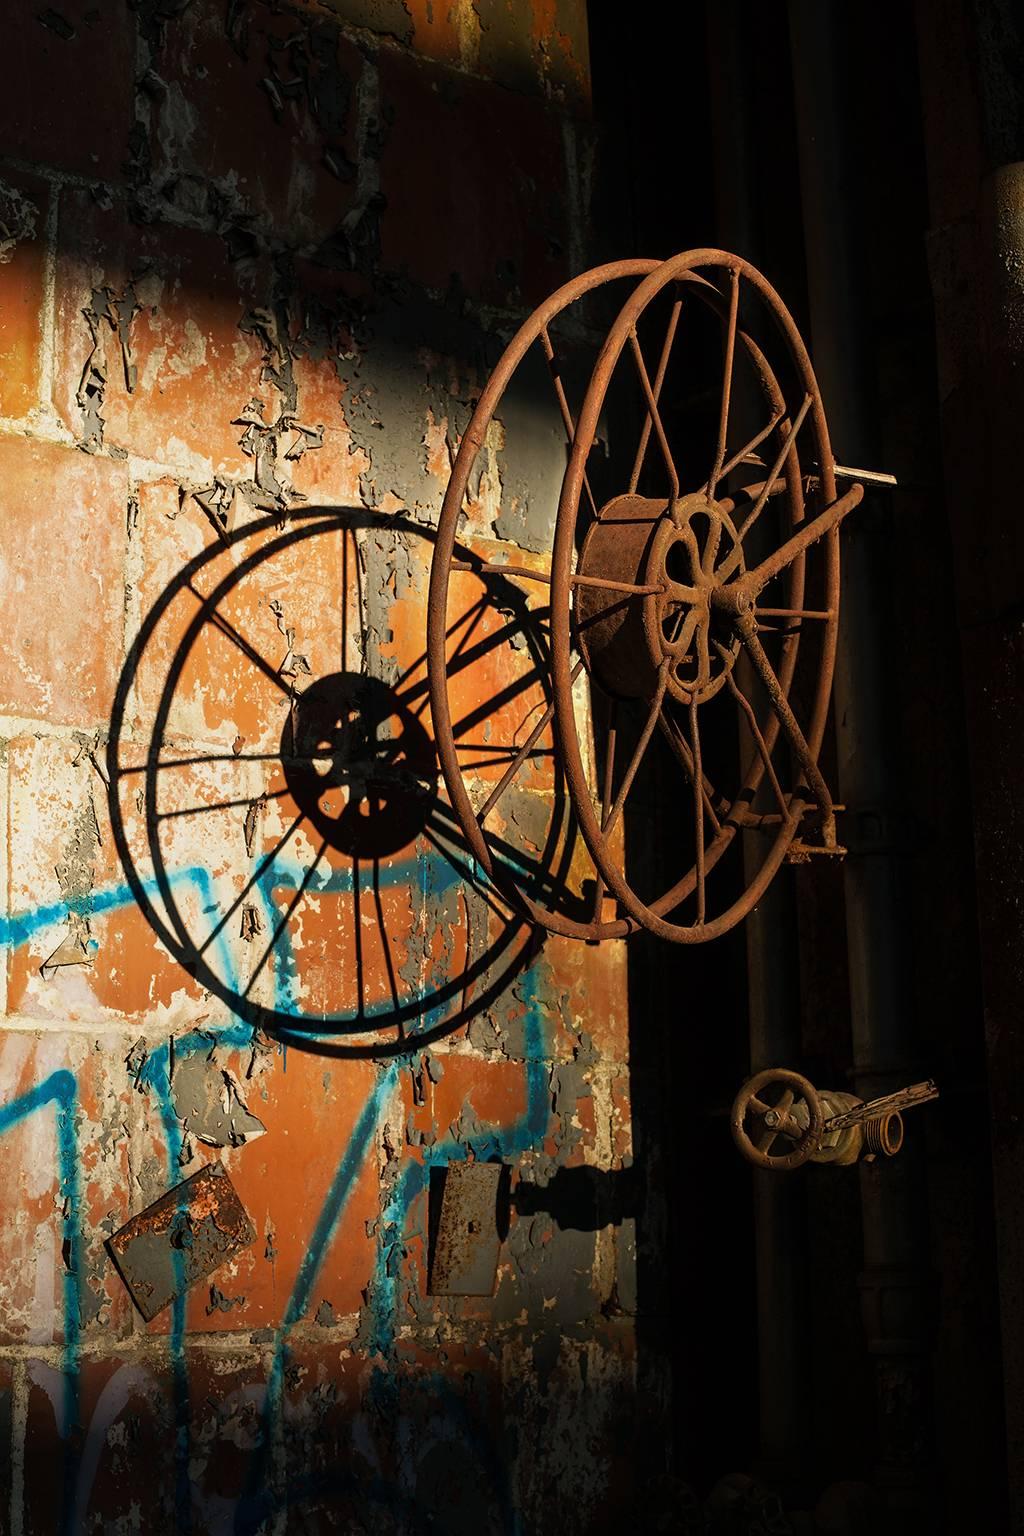 "Unaccompanied", industrial, abandoned, hose reel, shadows, orange, color photo